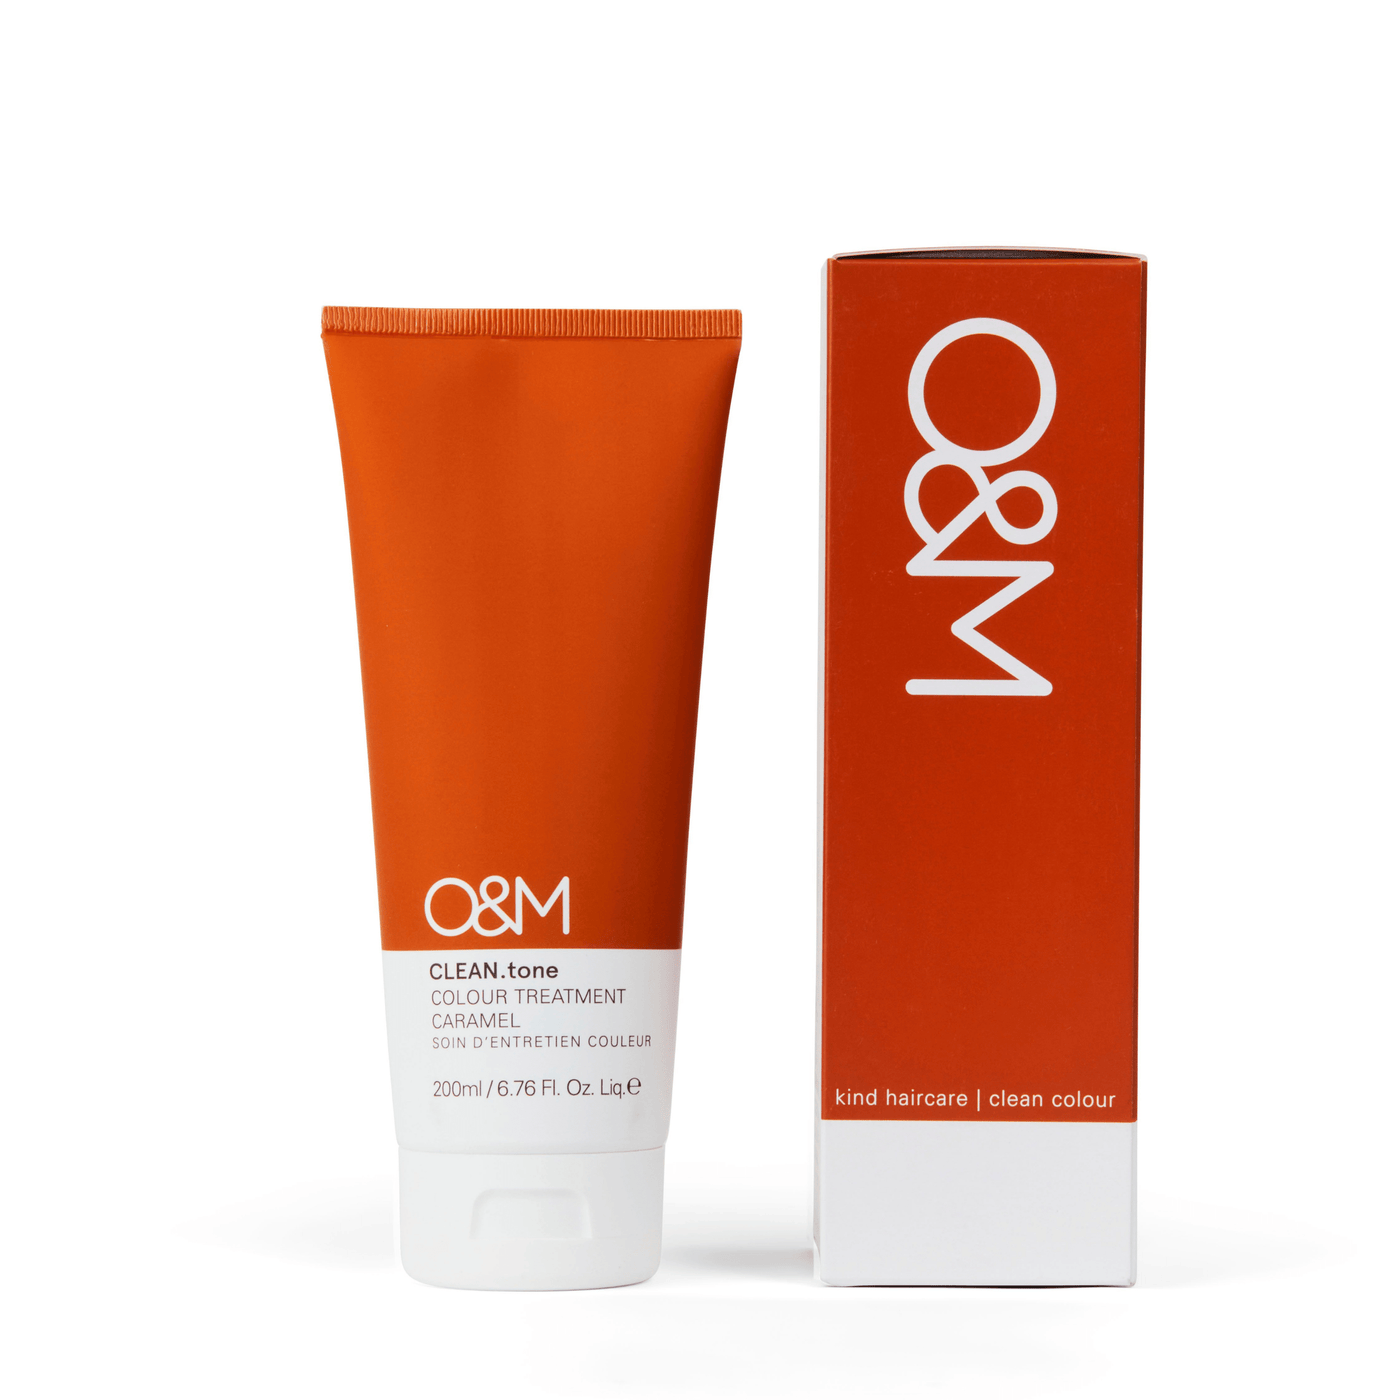 O&M Treatment O&M CLEAN.tone Caramel Colour Treatment 200ml